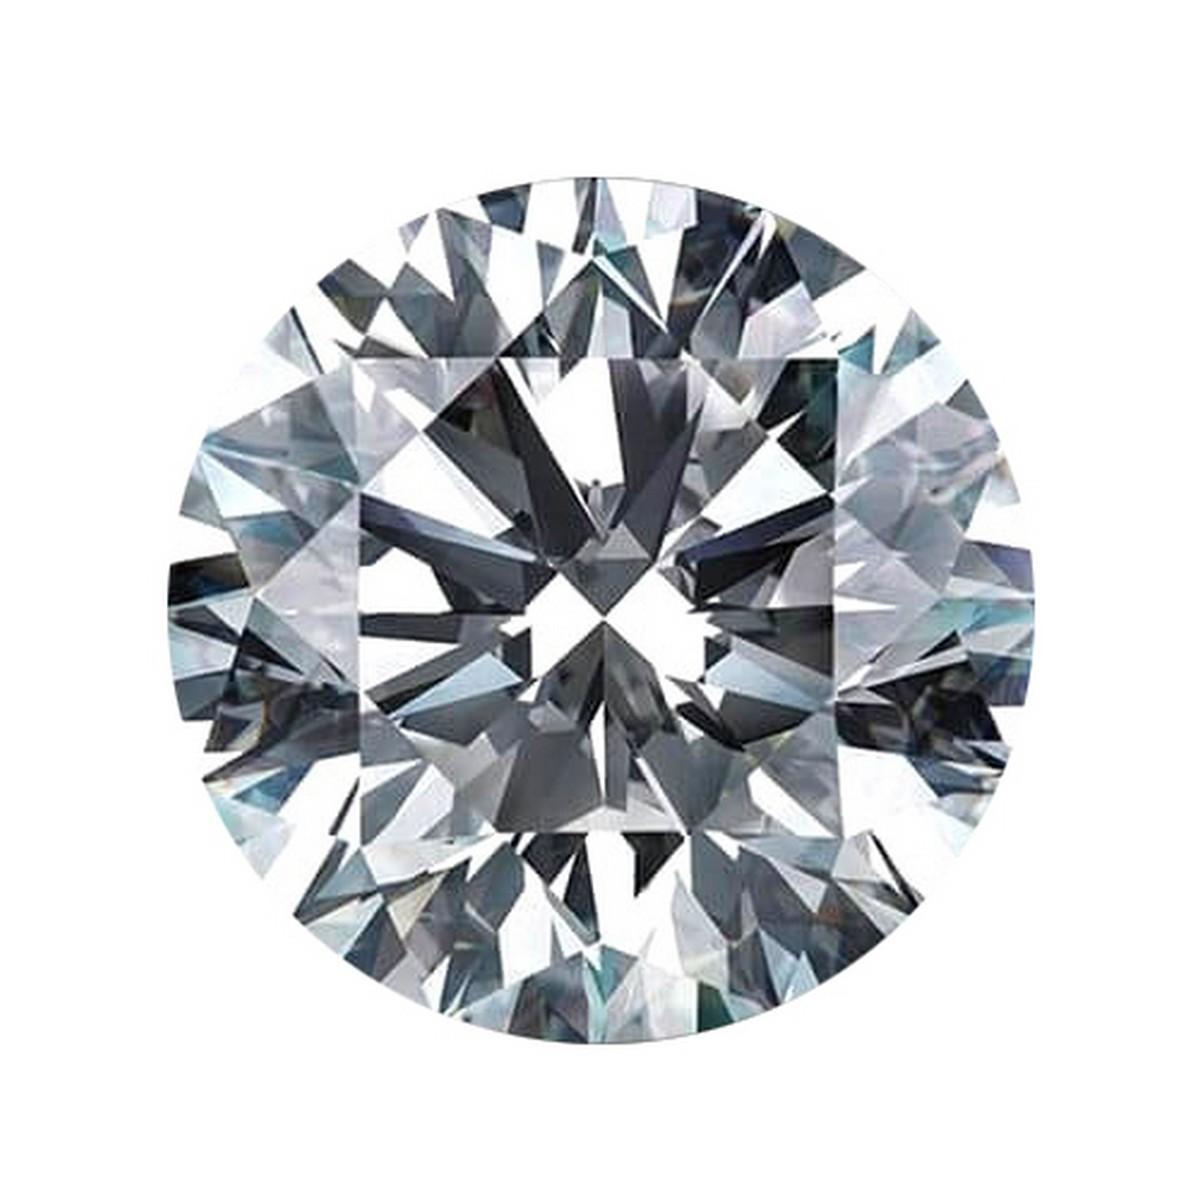 3.12 ctw. VVS2 IGI Certified Round Cut Loose Diamond (LAB GROWN)